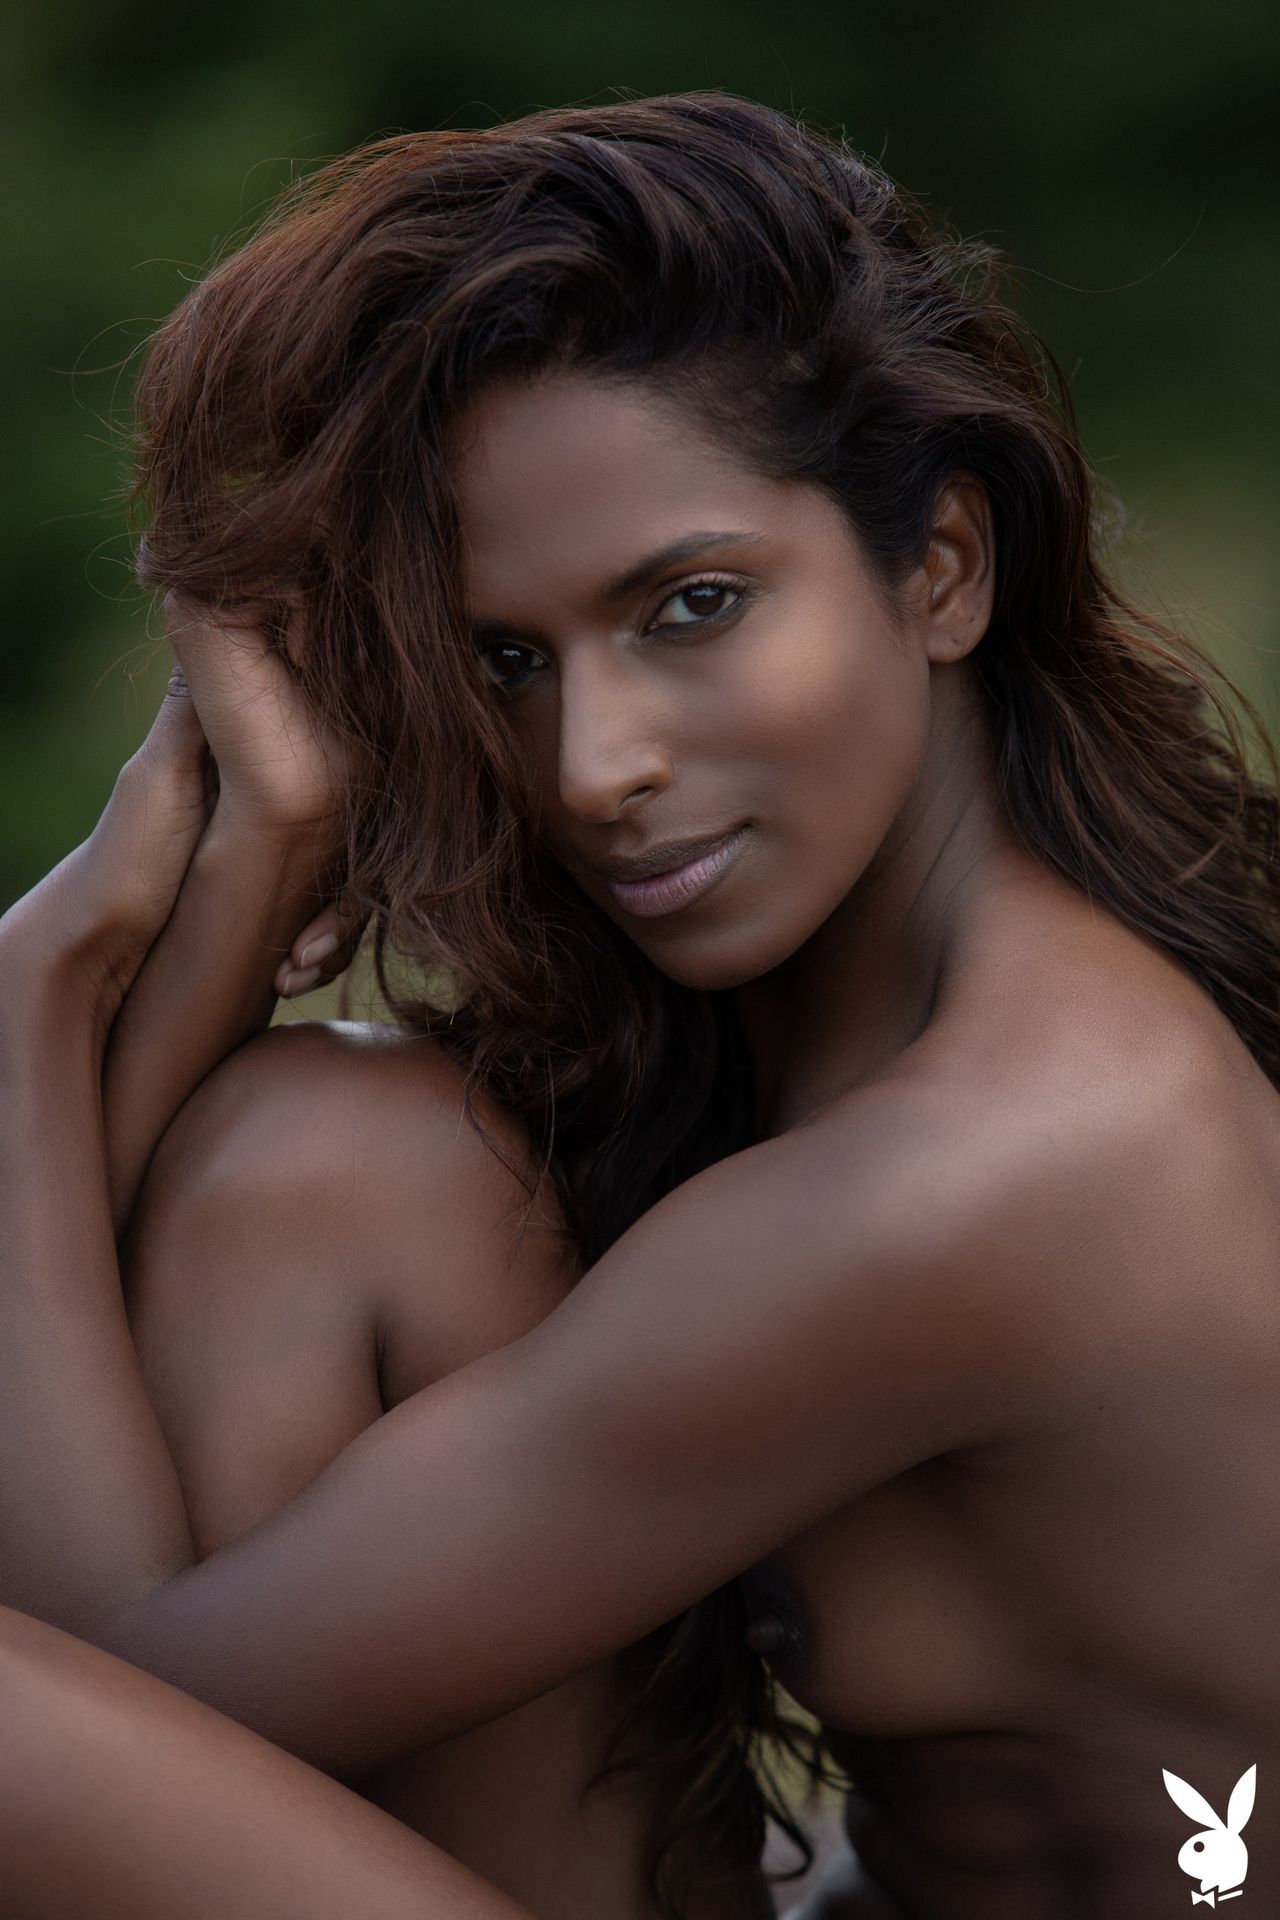 Nude taylor fernandes photos - Nirmala Fernandes